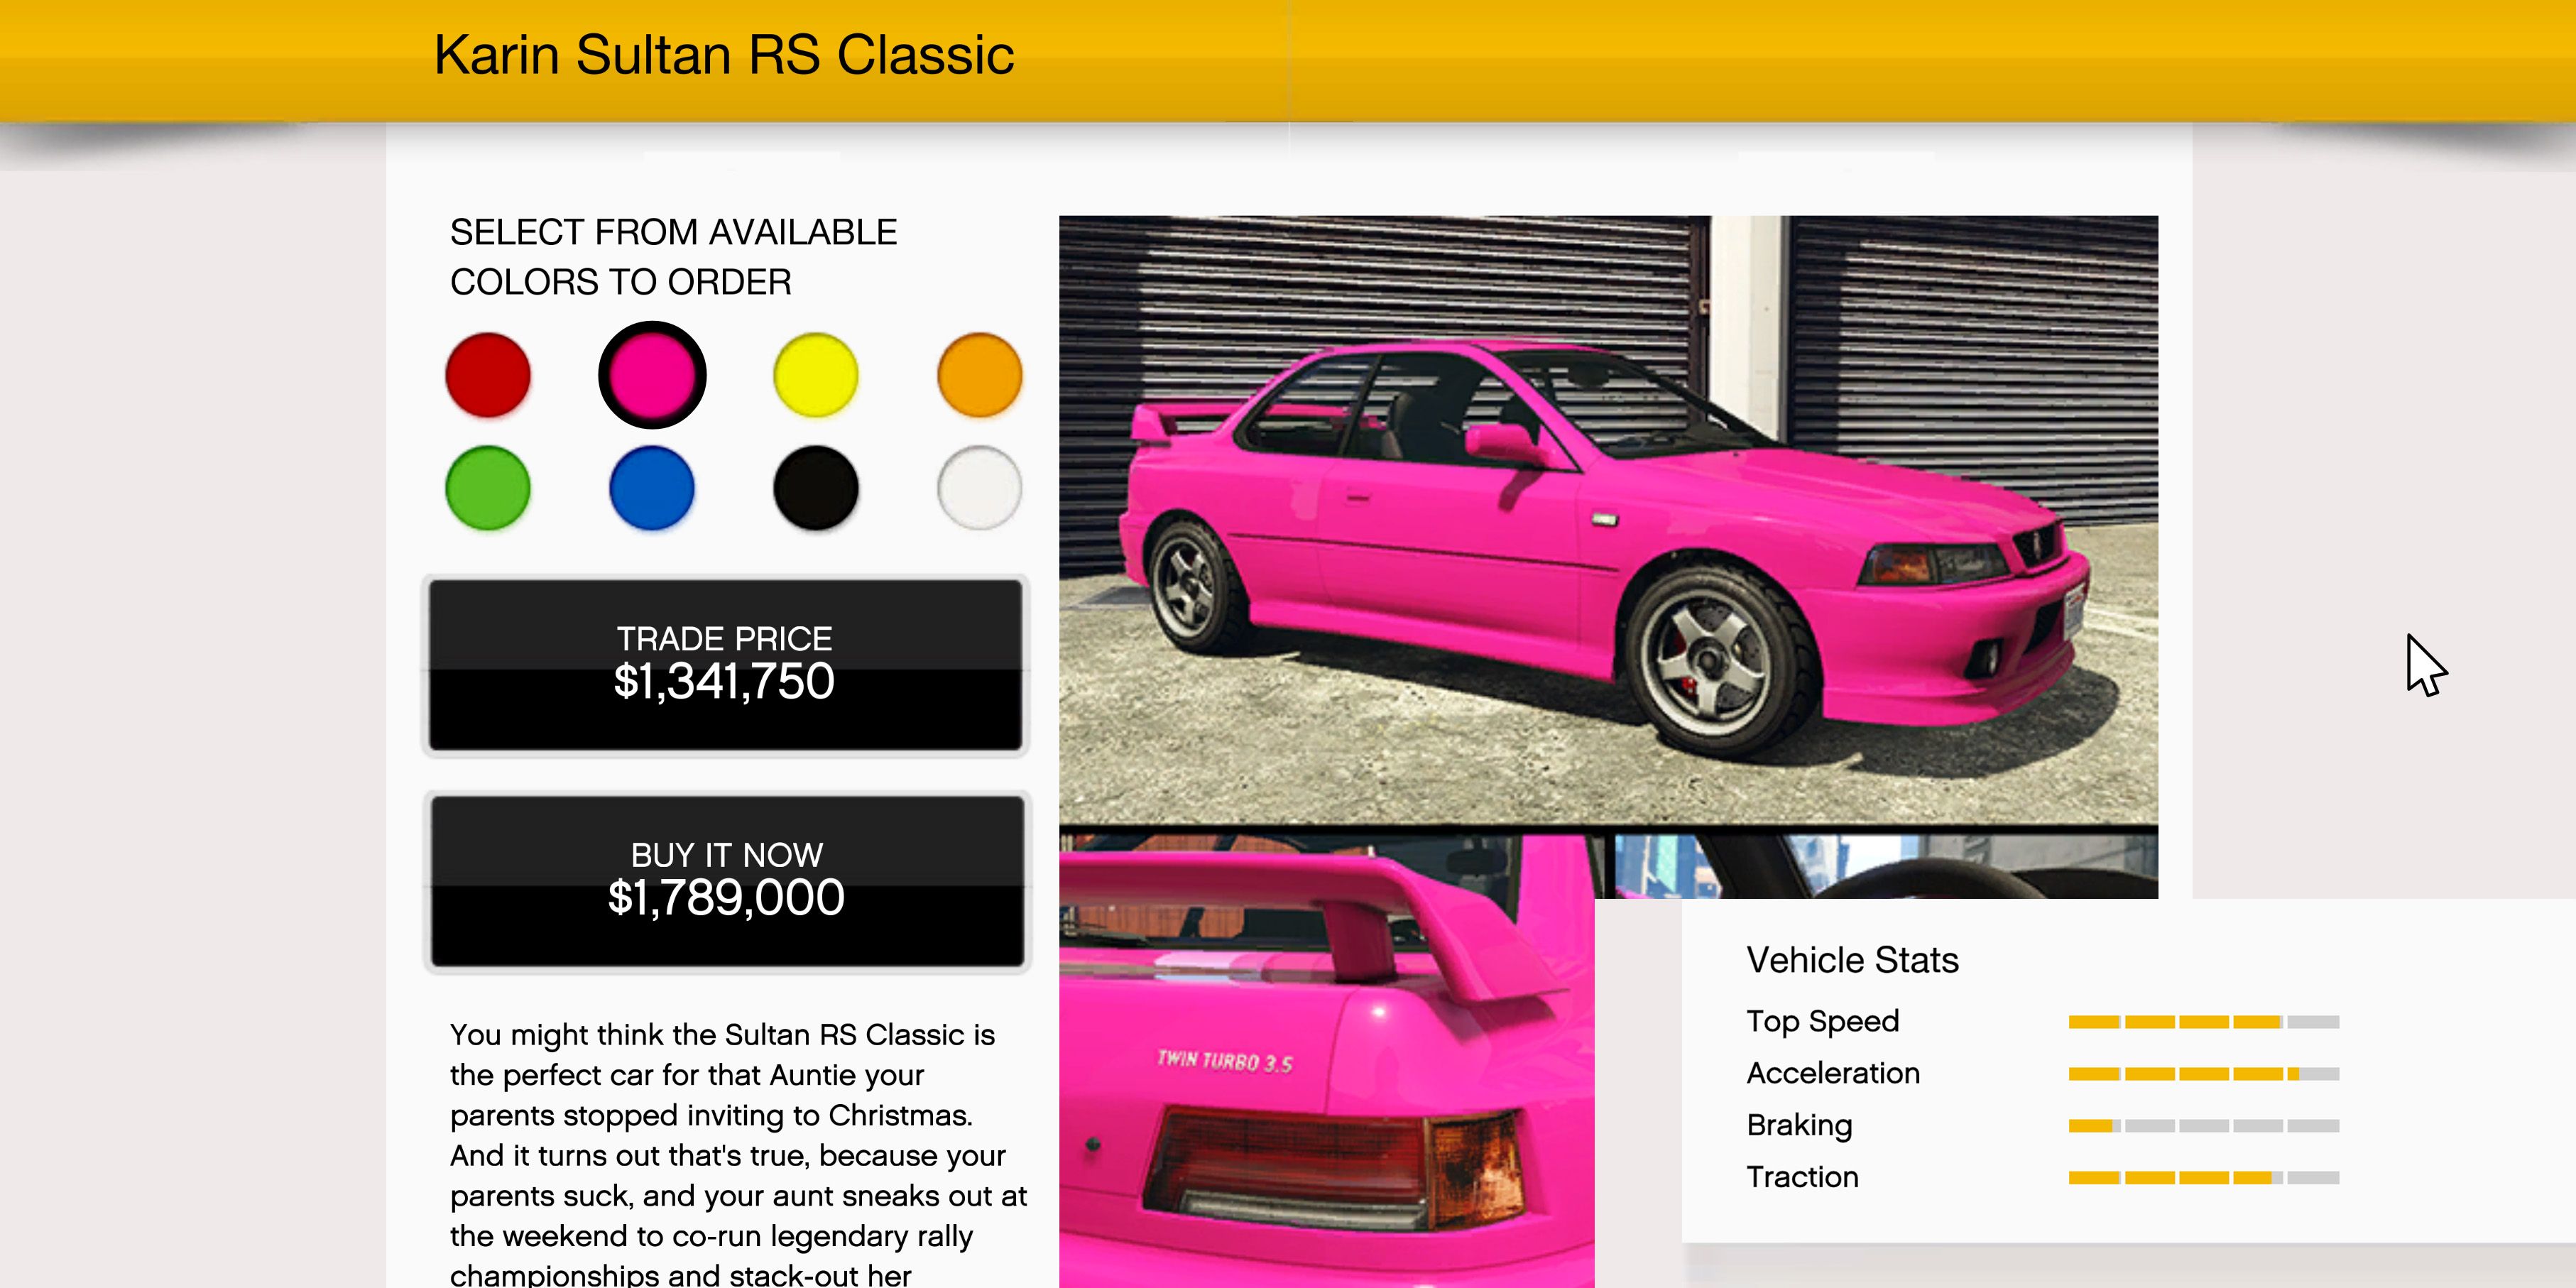 Karin Sultan RS Classic à vendre dans GTA Online